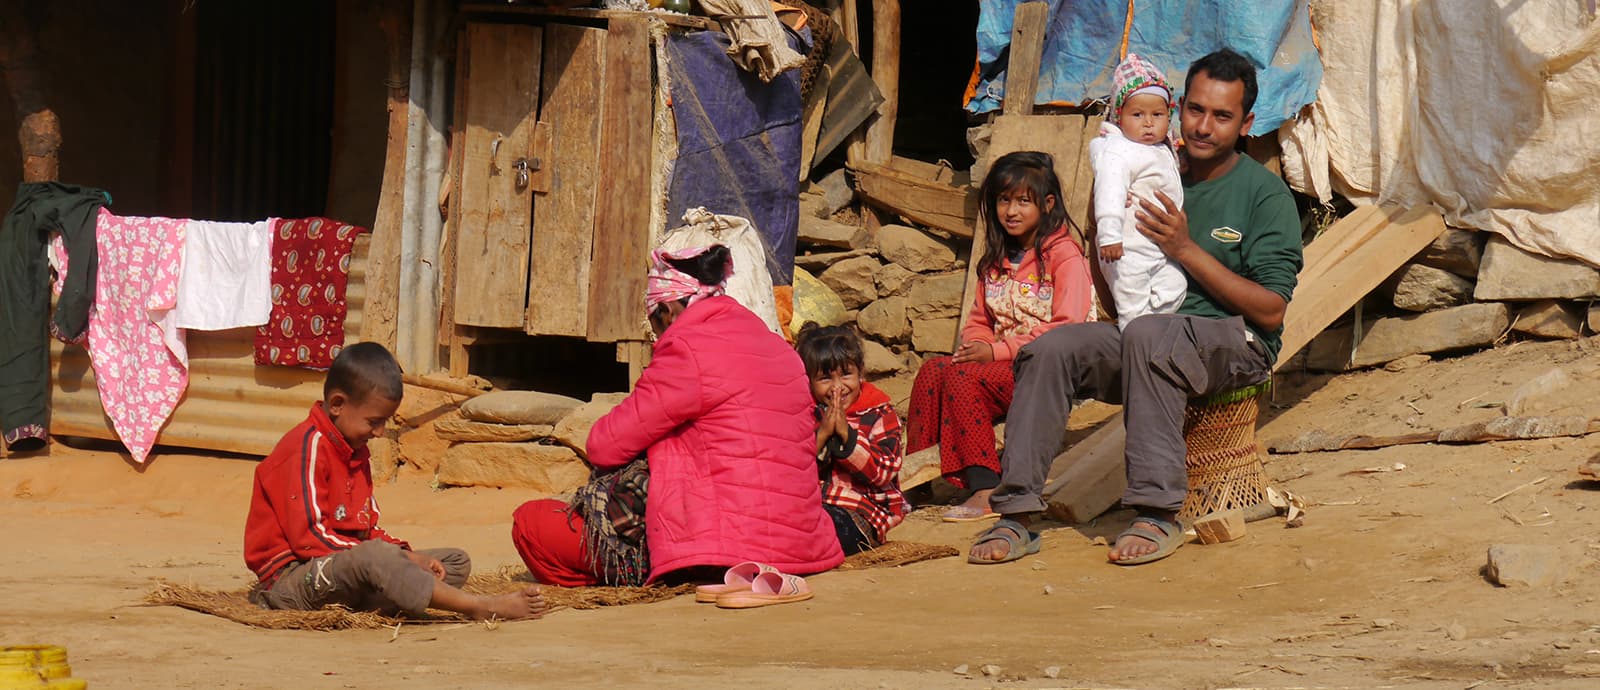 Arme Verhältnisse in Nepal Familie mit Kindern in Baracken